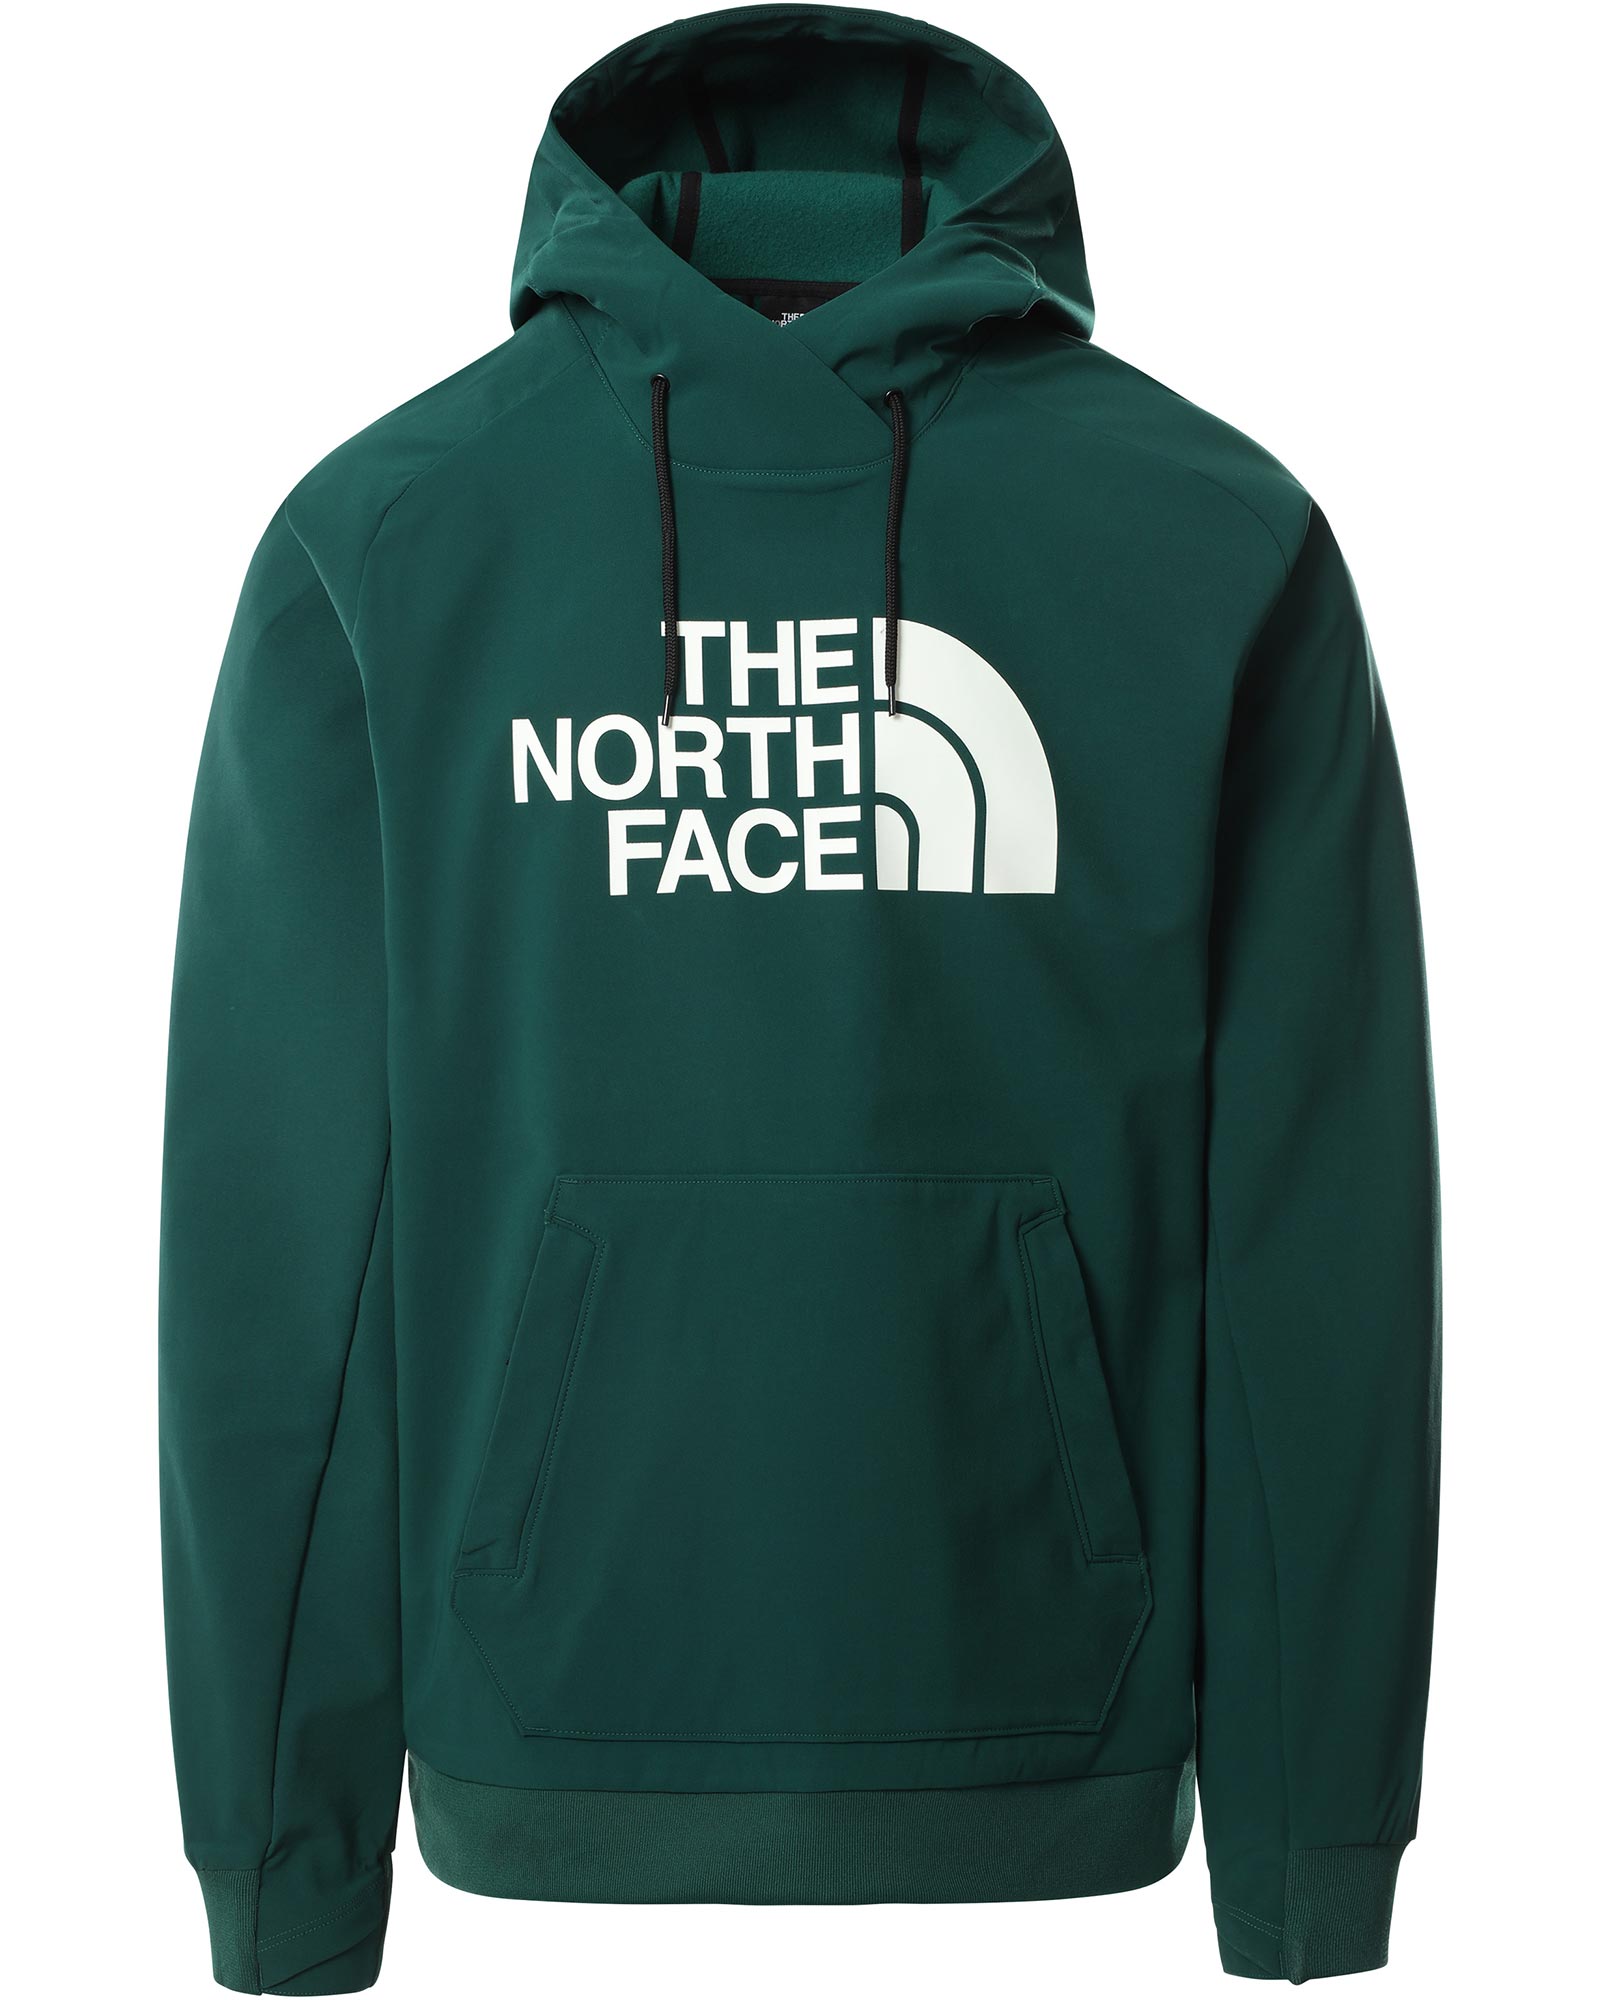 The North Face Teckno Logo Men's Hoodie 0